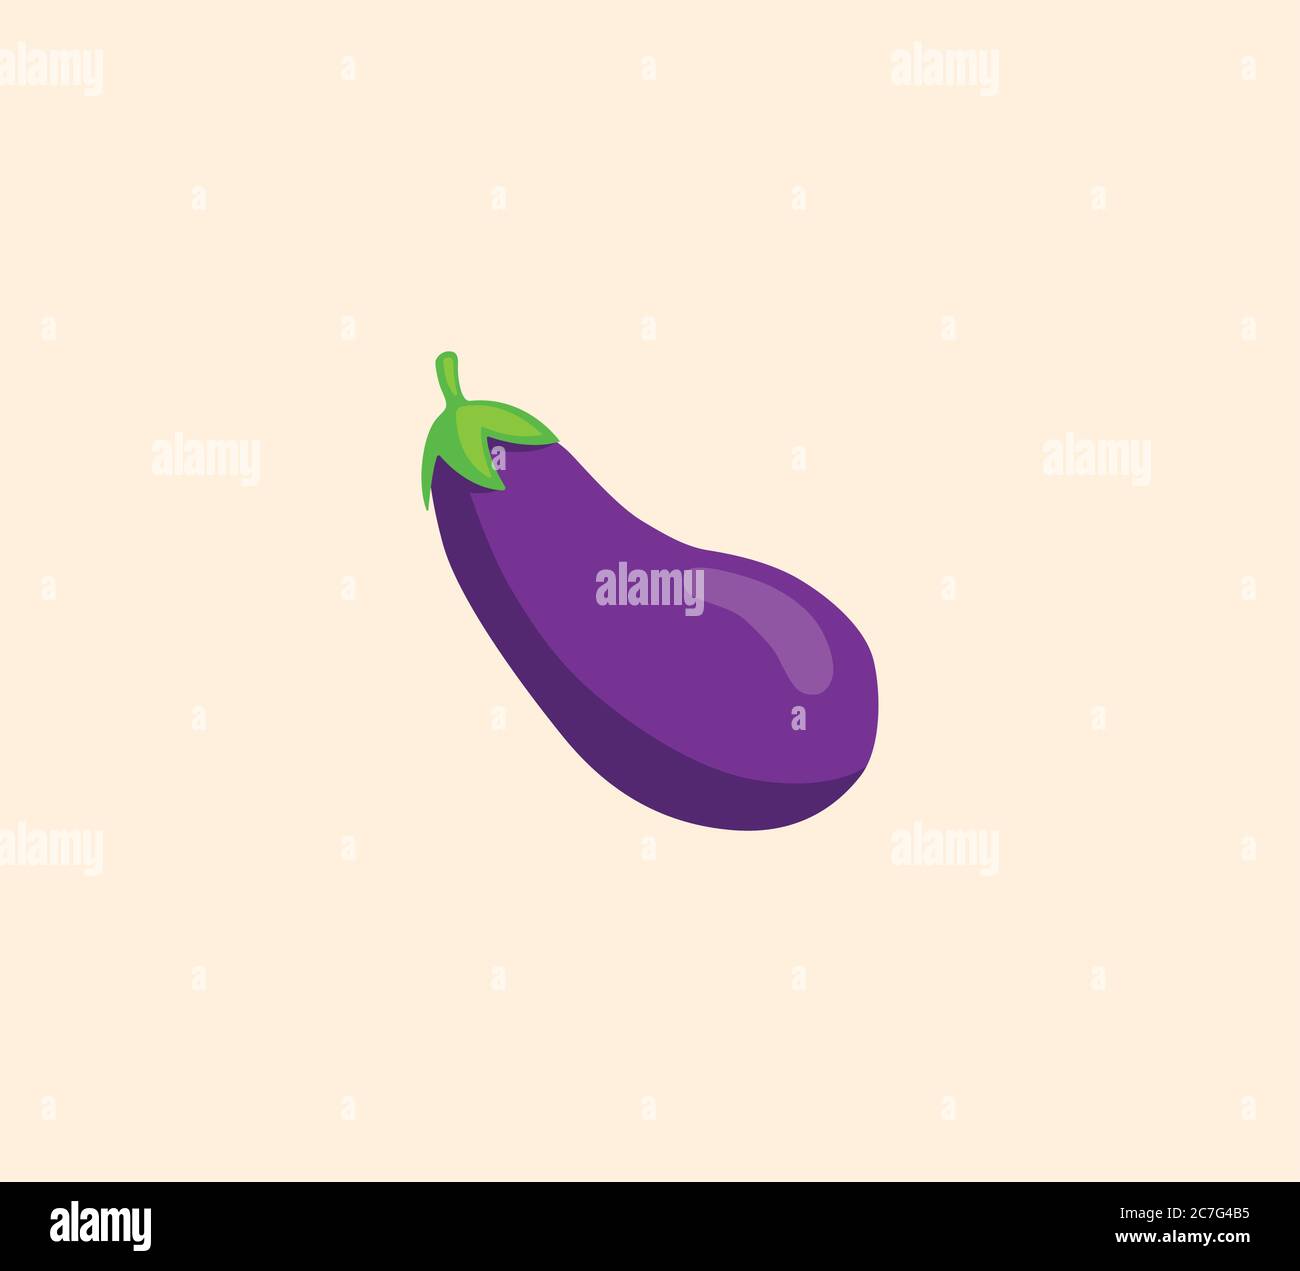 Eggplant vector isolated illustration. Eggplant icon Stock Vector